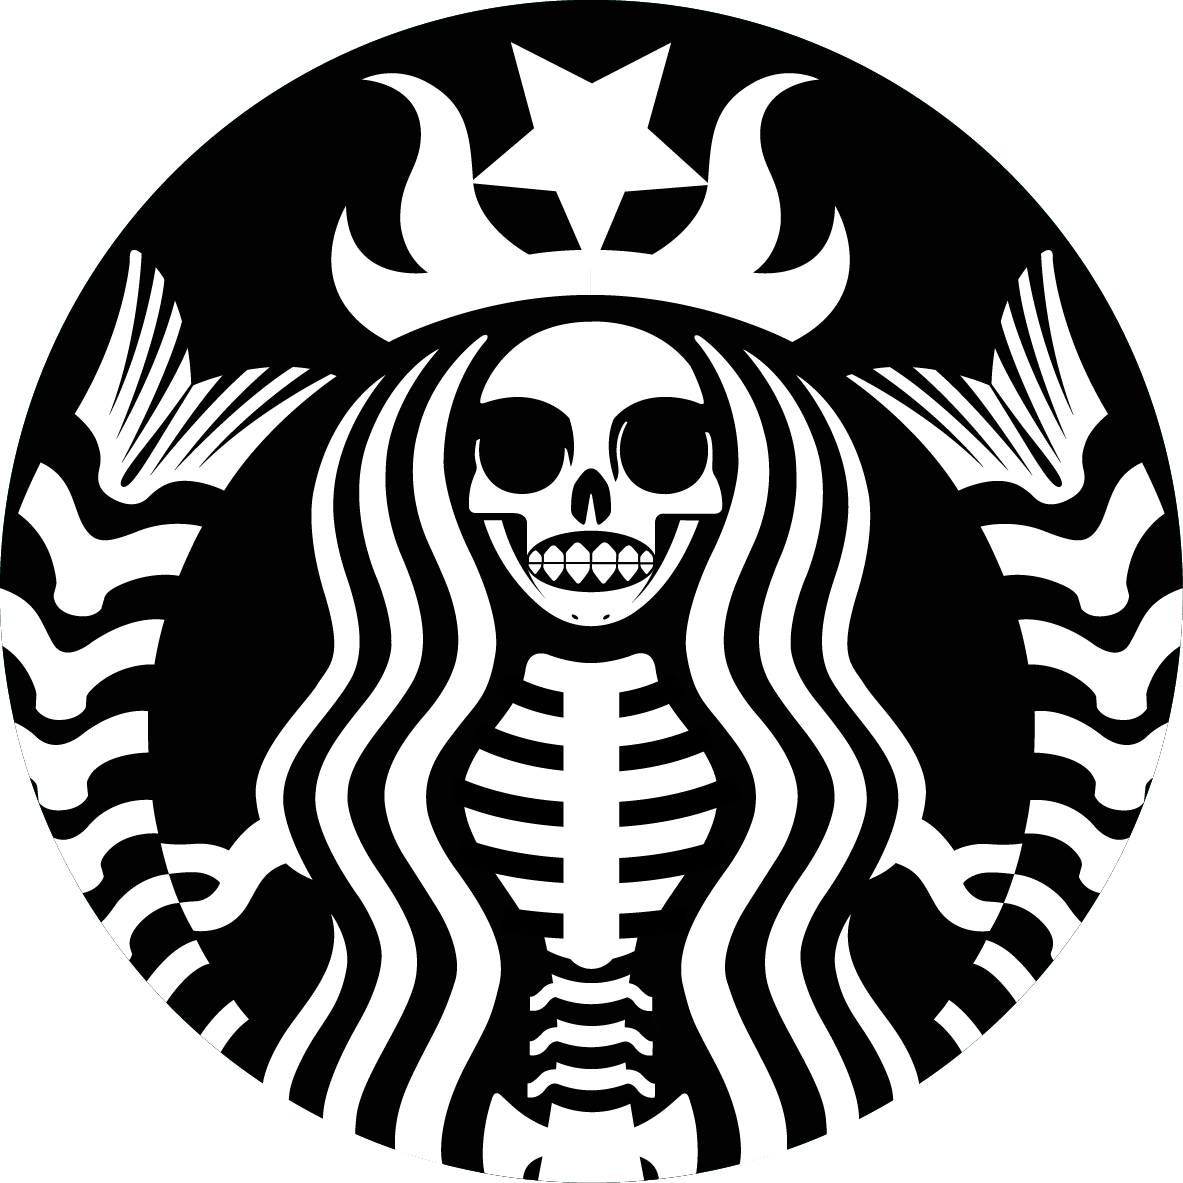 Coffee Skull Espresso Black Starbucks Beans Cafe PNG Image